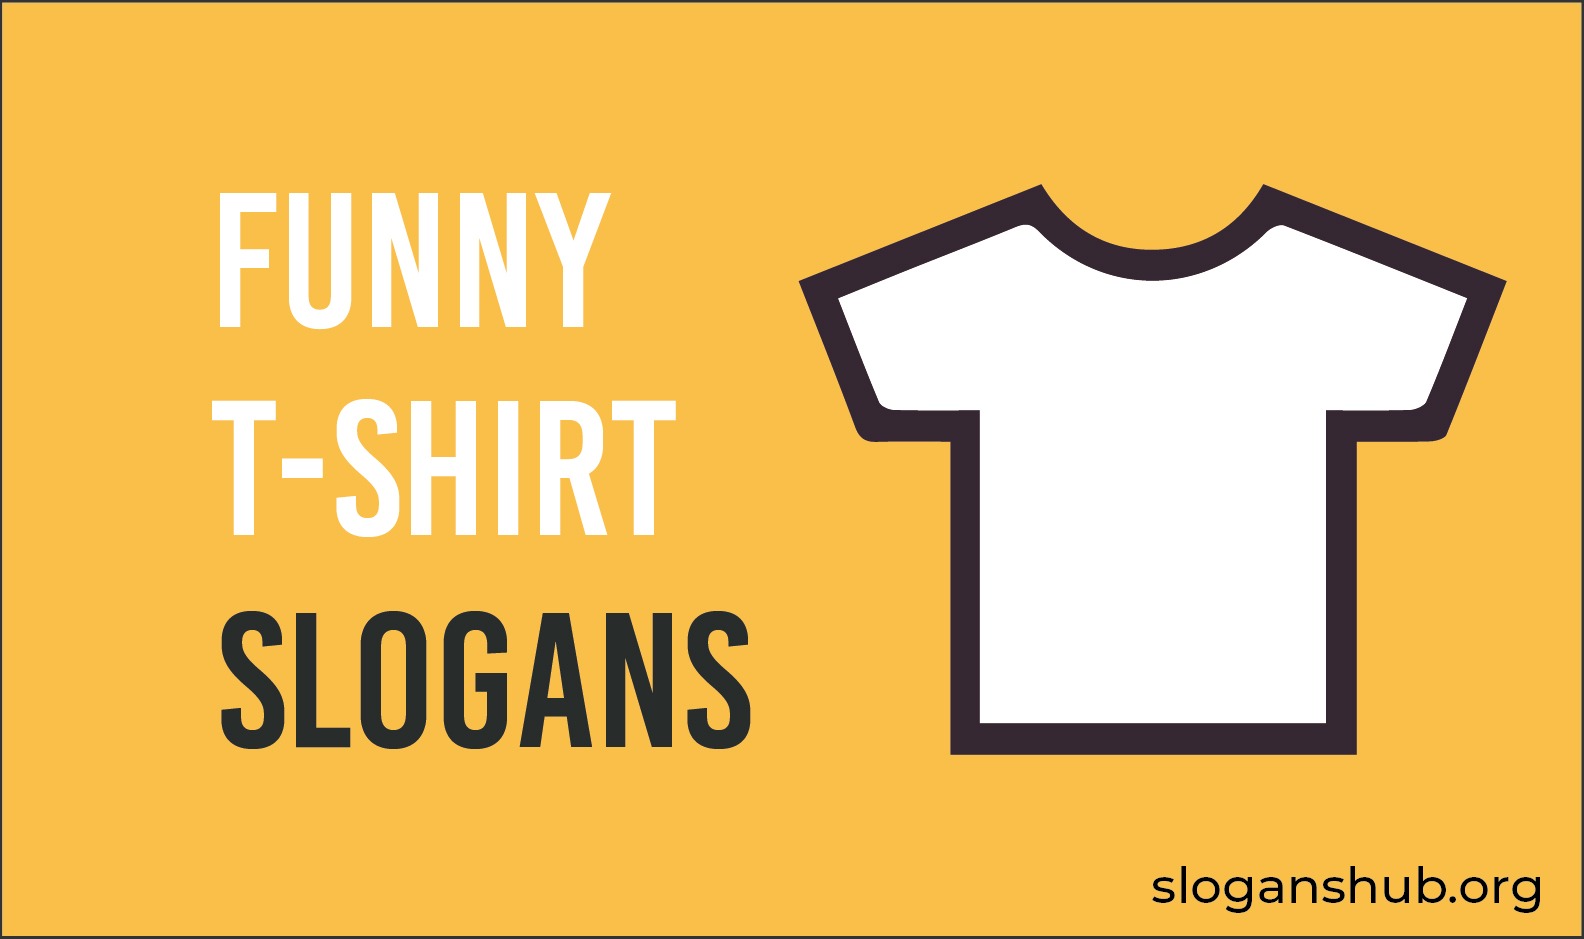 58 Funny T-shirt slogans